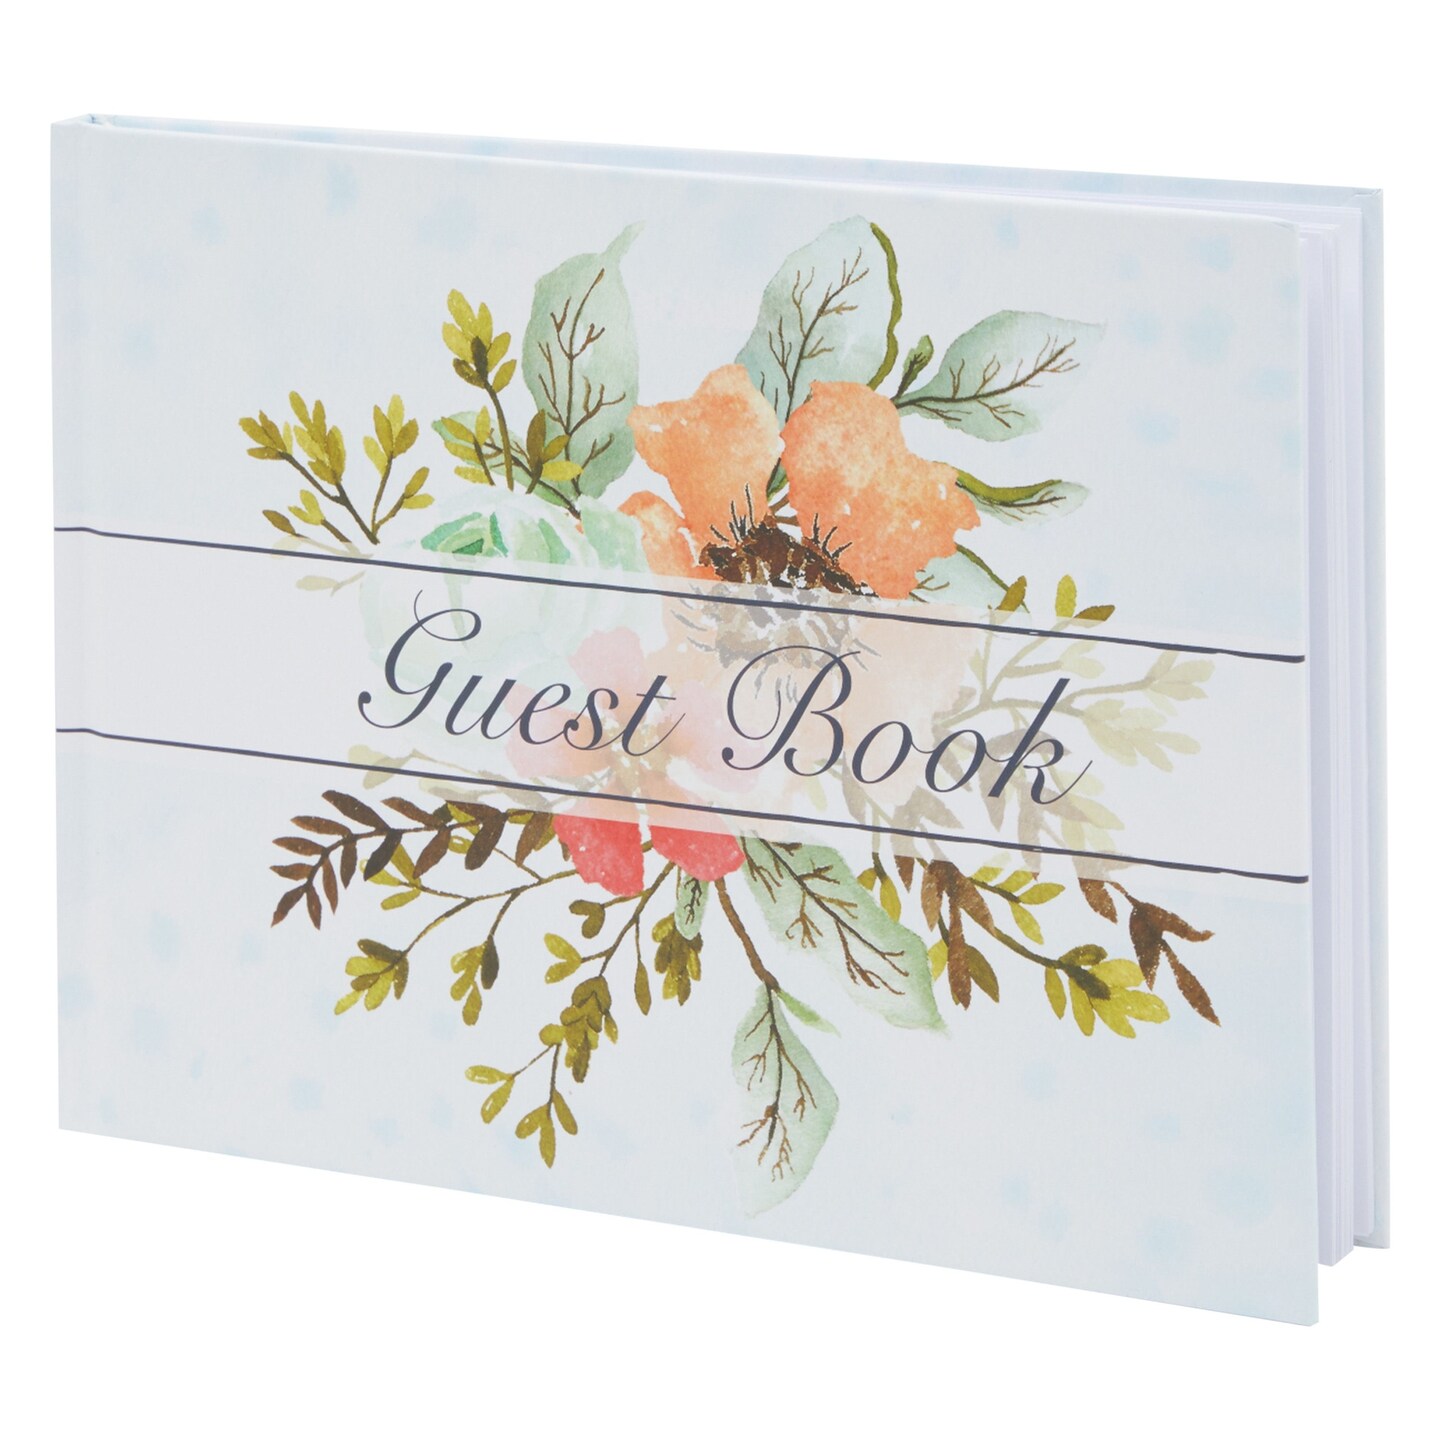 New! Wedding Guest Book - Guest Book Wedding Reception - Baby